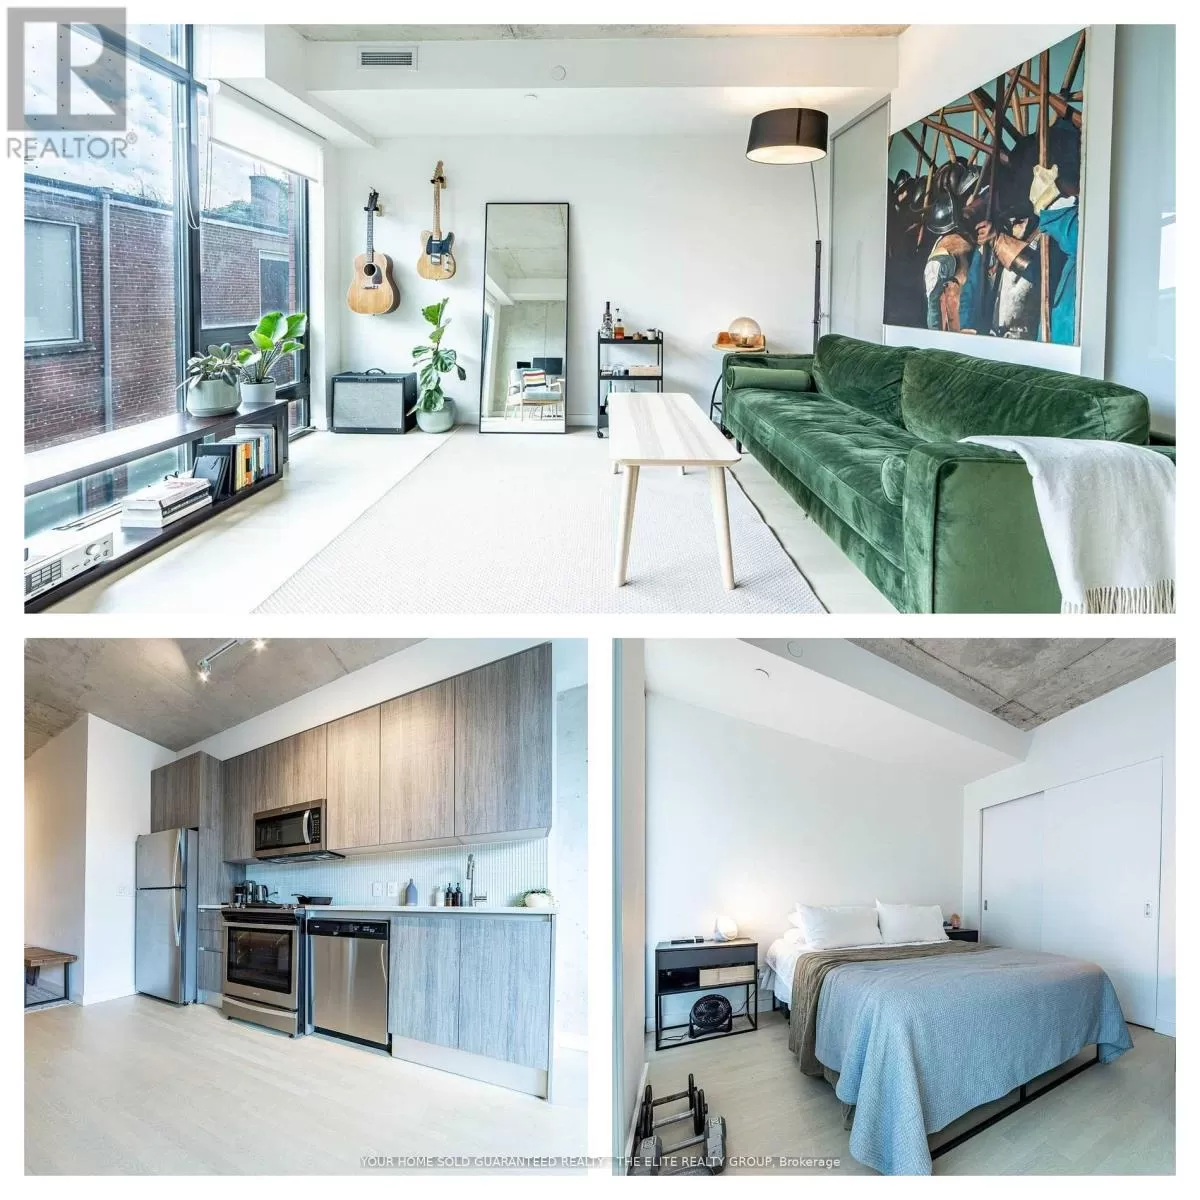 Apartment for rent: 225 - 246 Logan Avenue E, Toronto, Ontario M4M 1J2